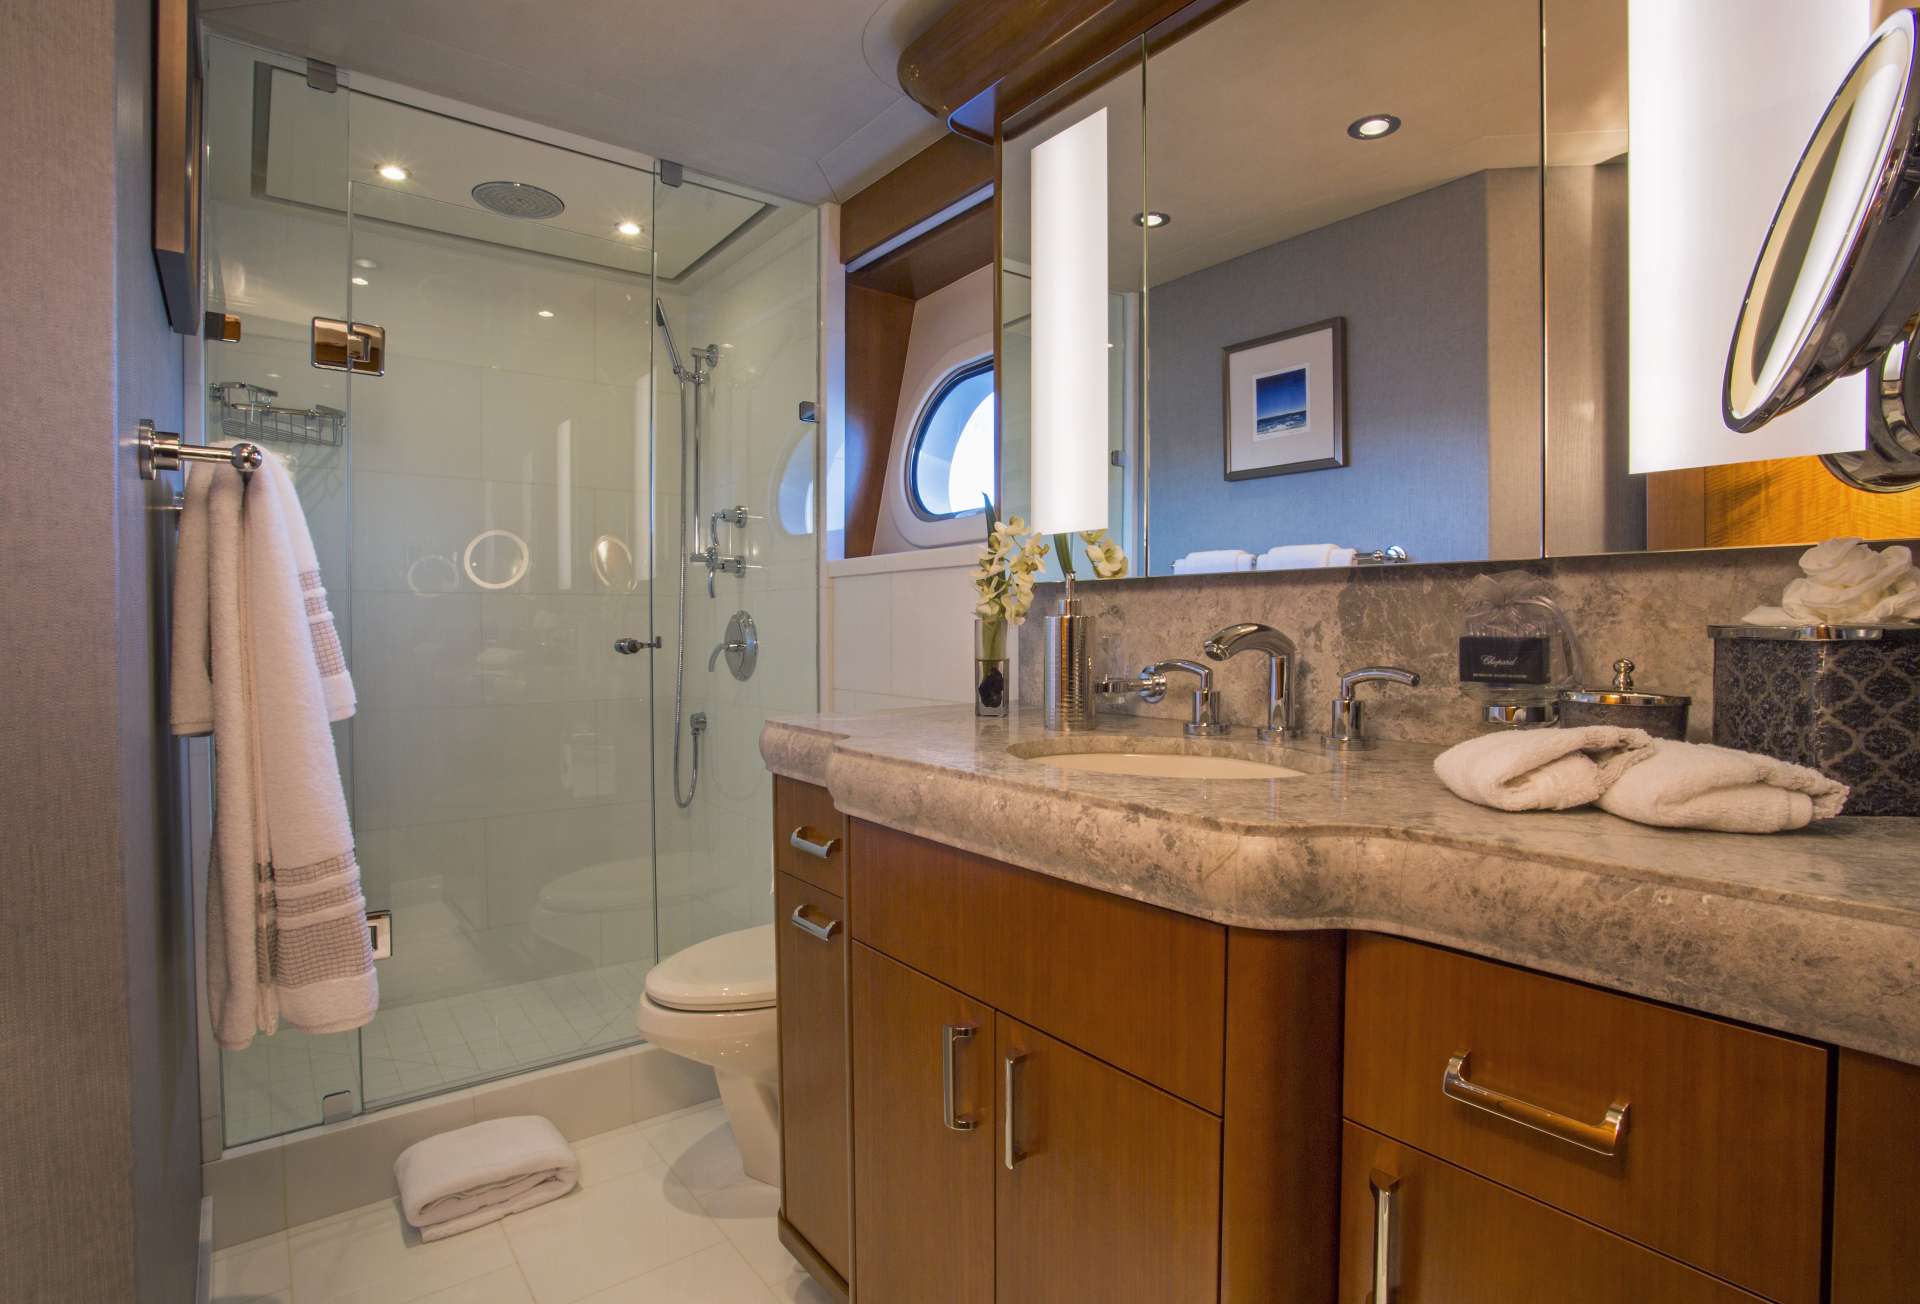 FAR NIENTE Yacht Charter - Guest Bath